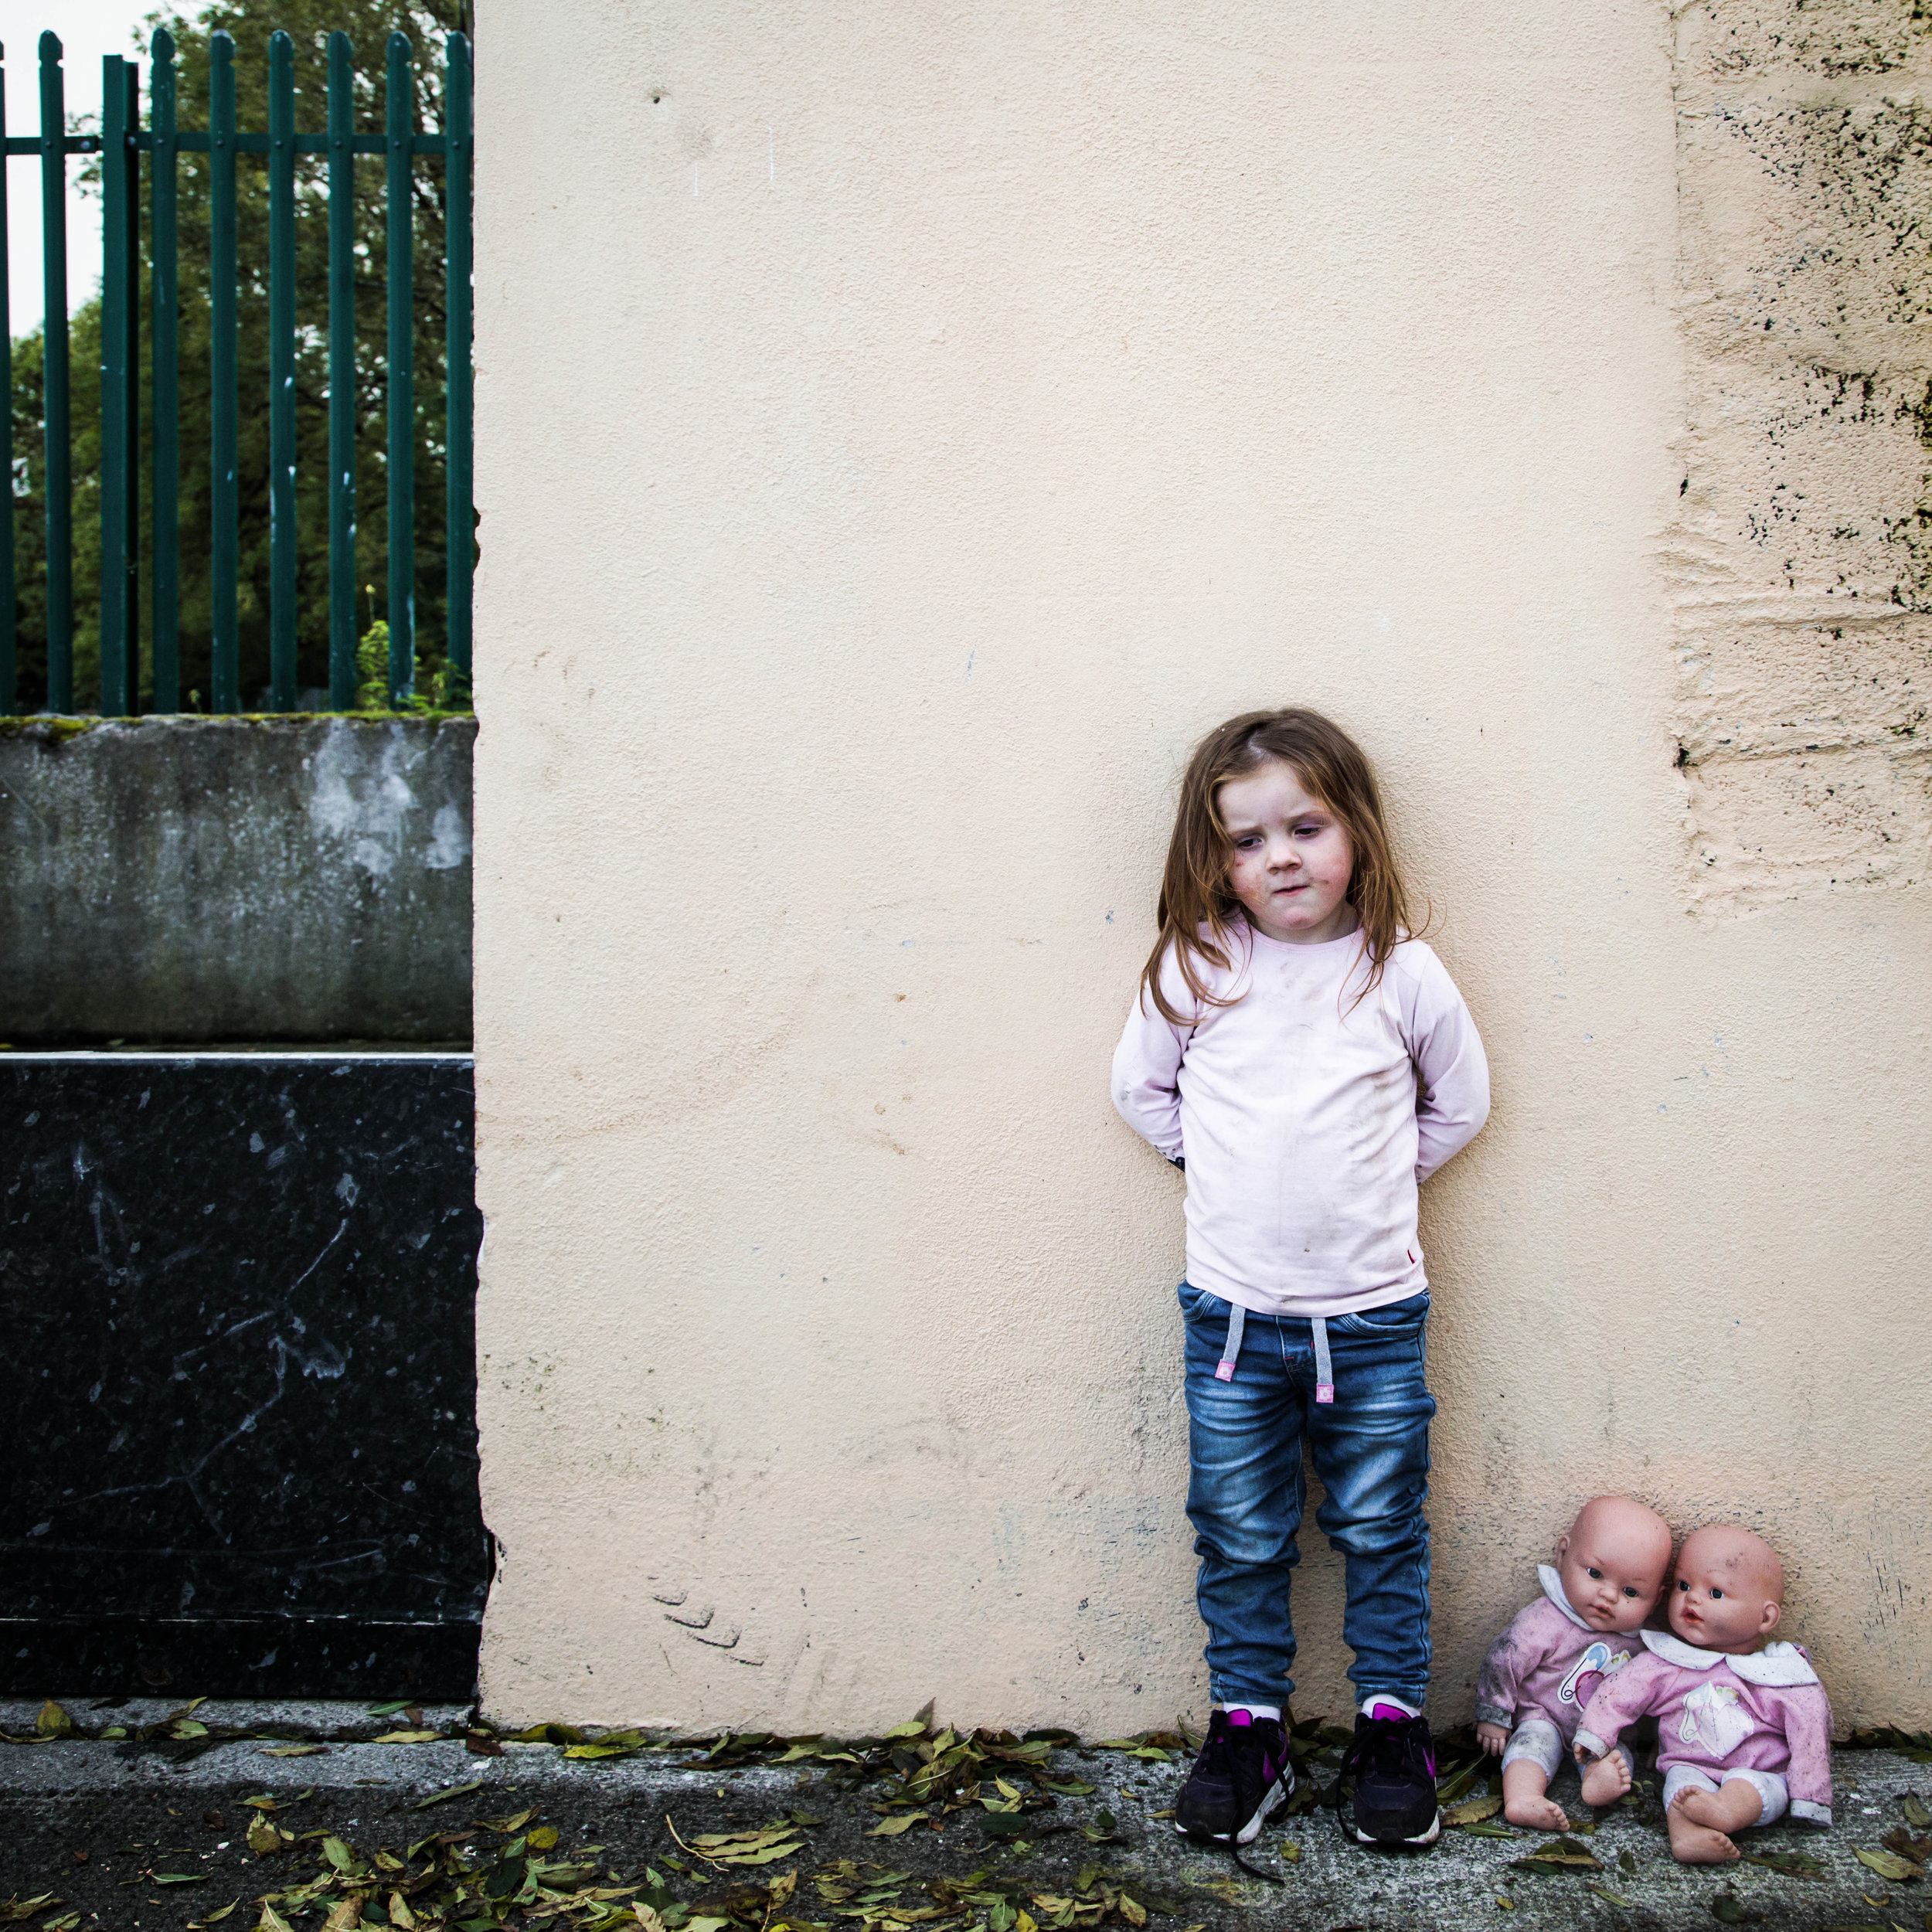 Irish Traveller Girl With Dolls